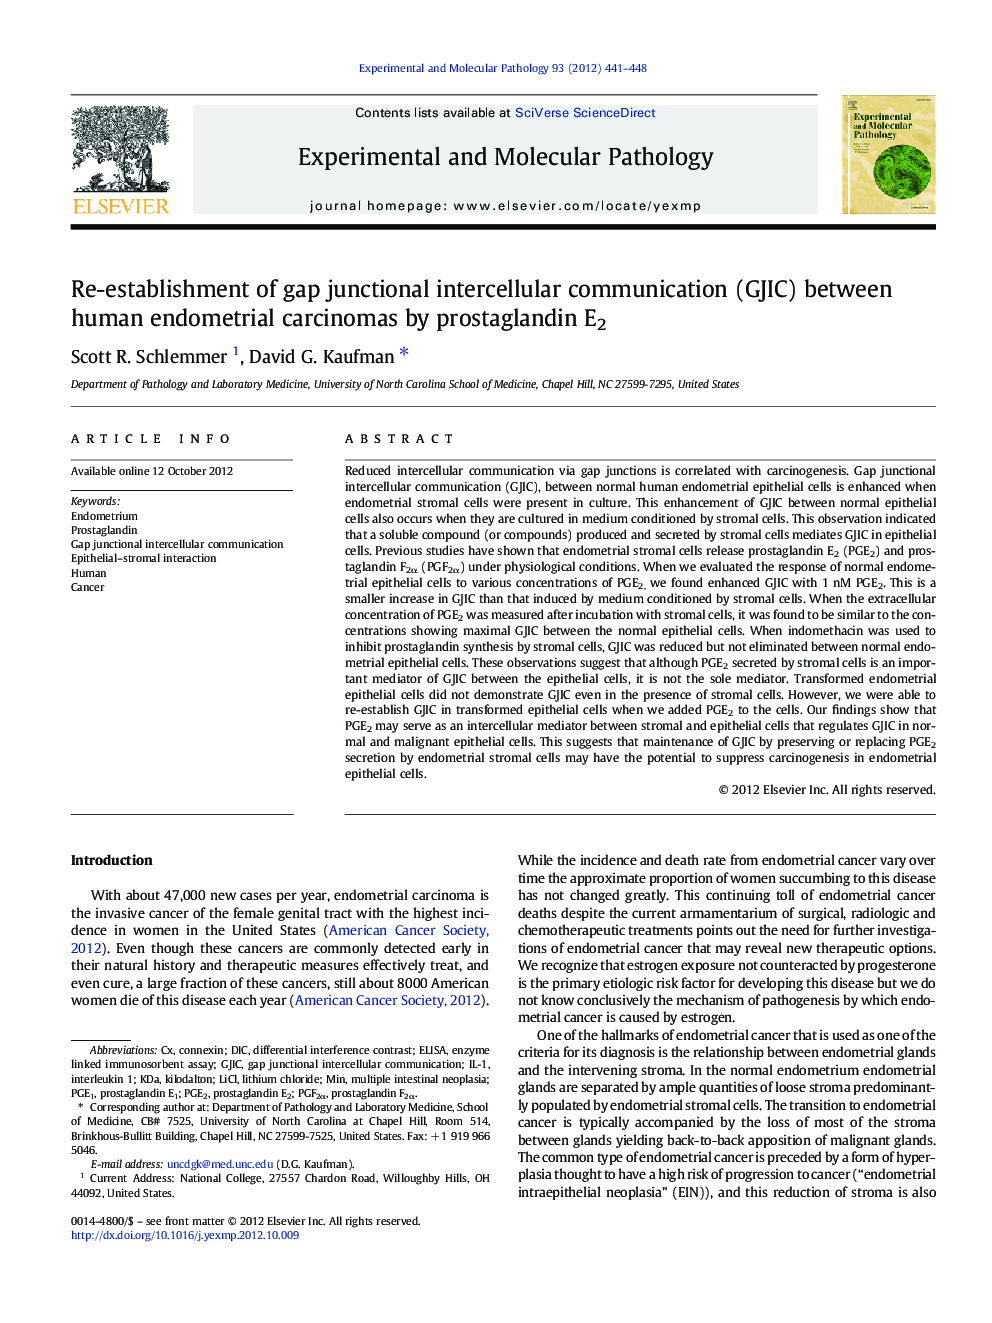 Re-establishment of gap junctional intercellular communication (GJIC) between human endometrial carcinomas by prostaglandin E2